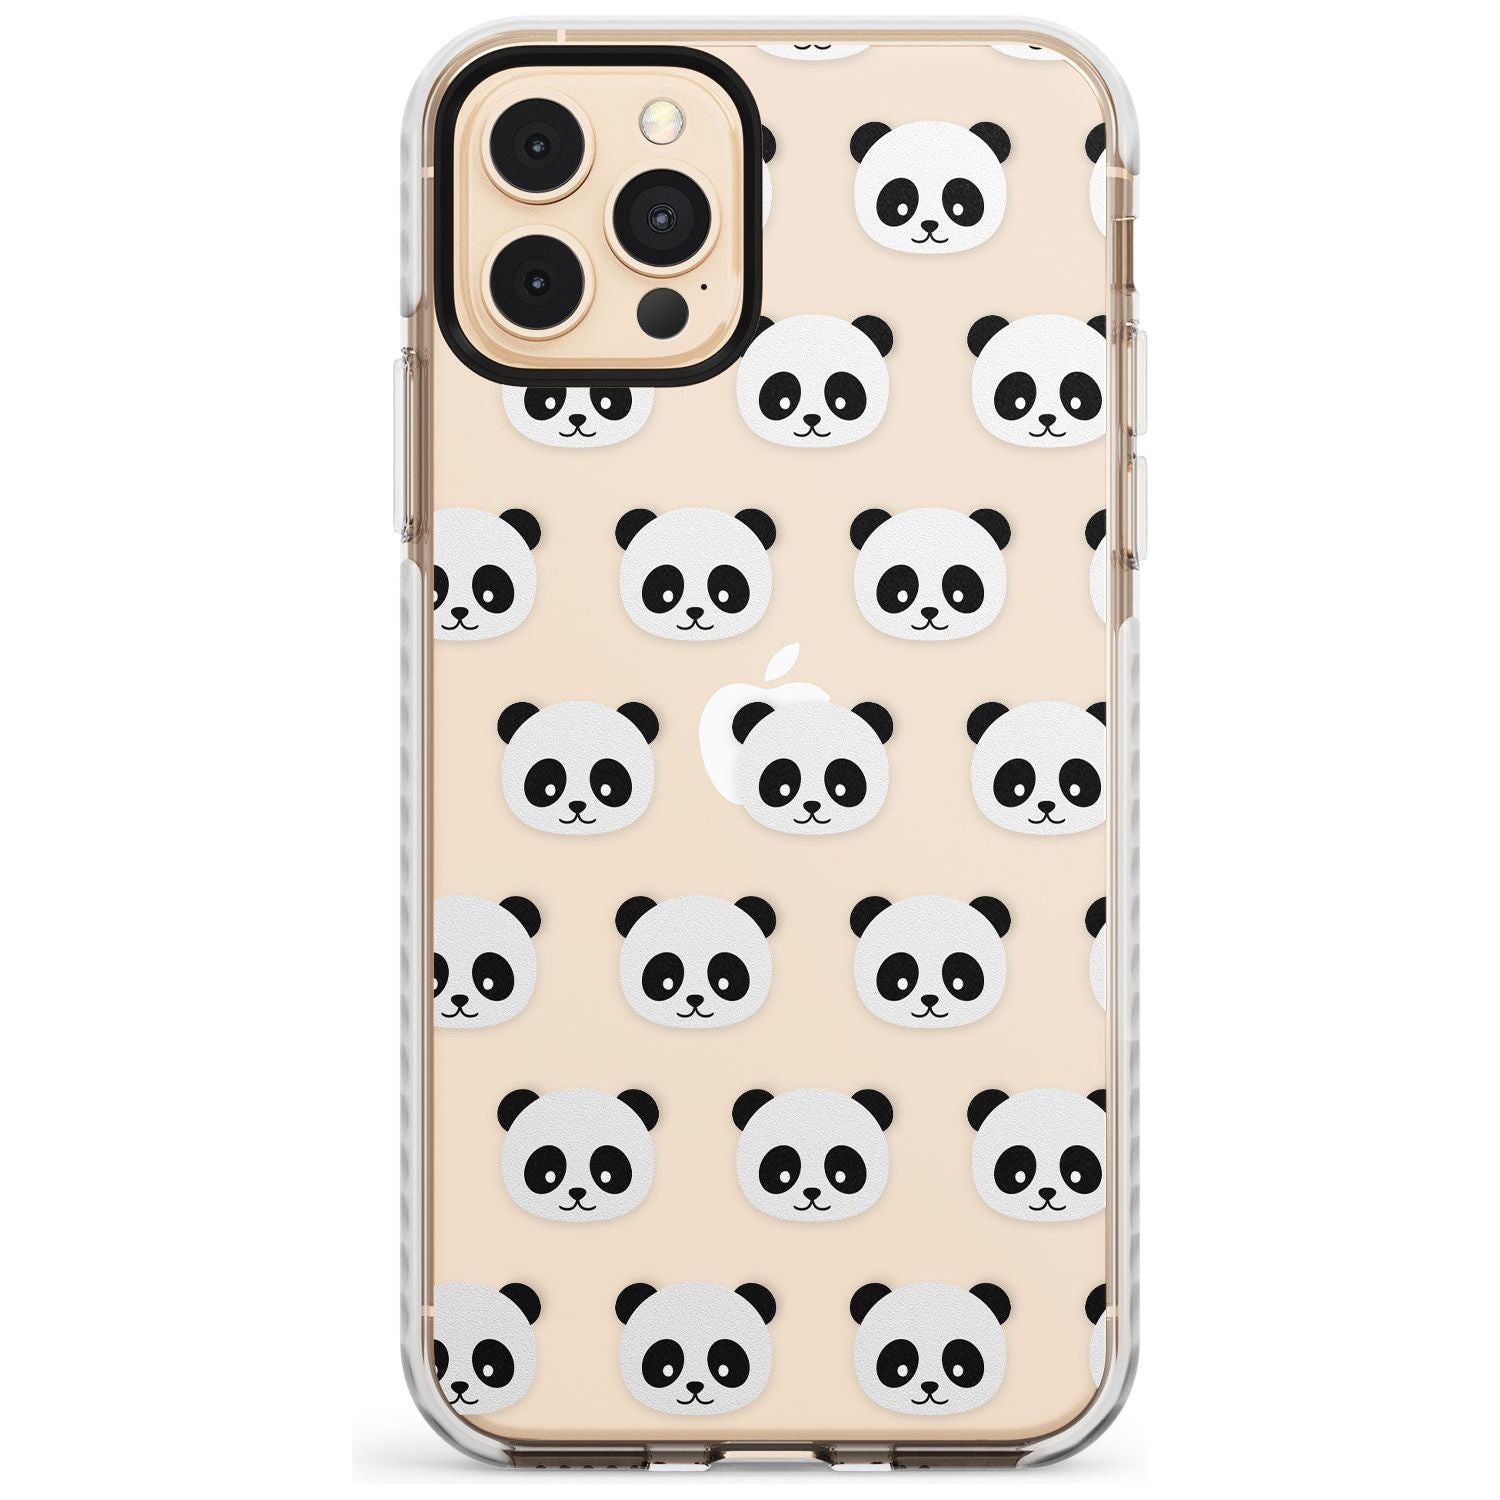 Panda Face Pattern Slim TPU Phone Case for iPhone 11 Pro Max